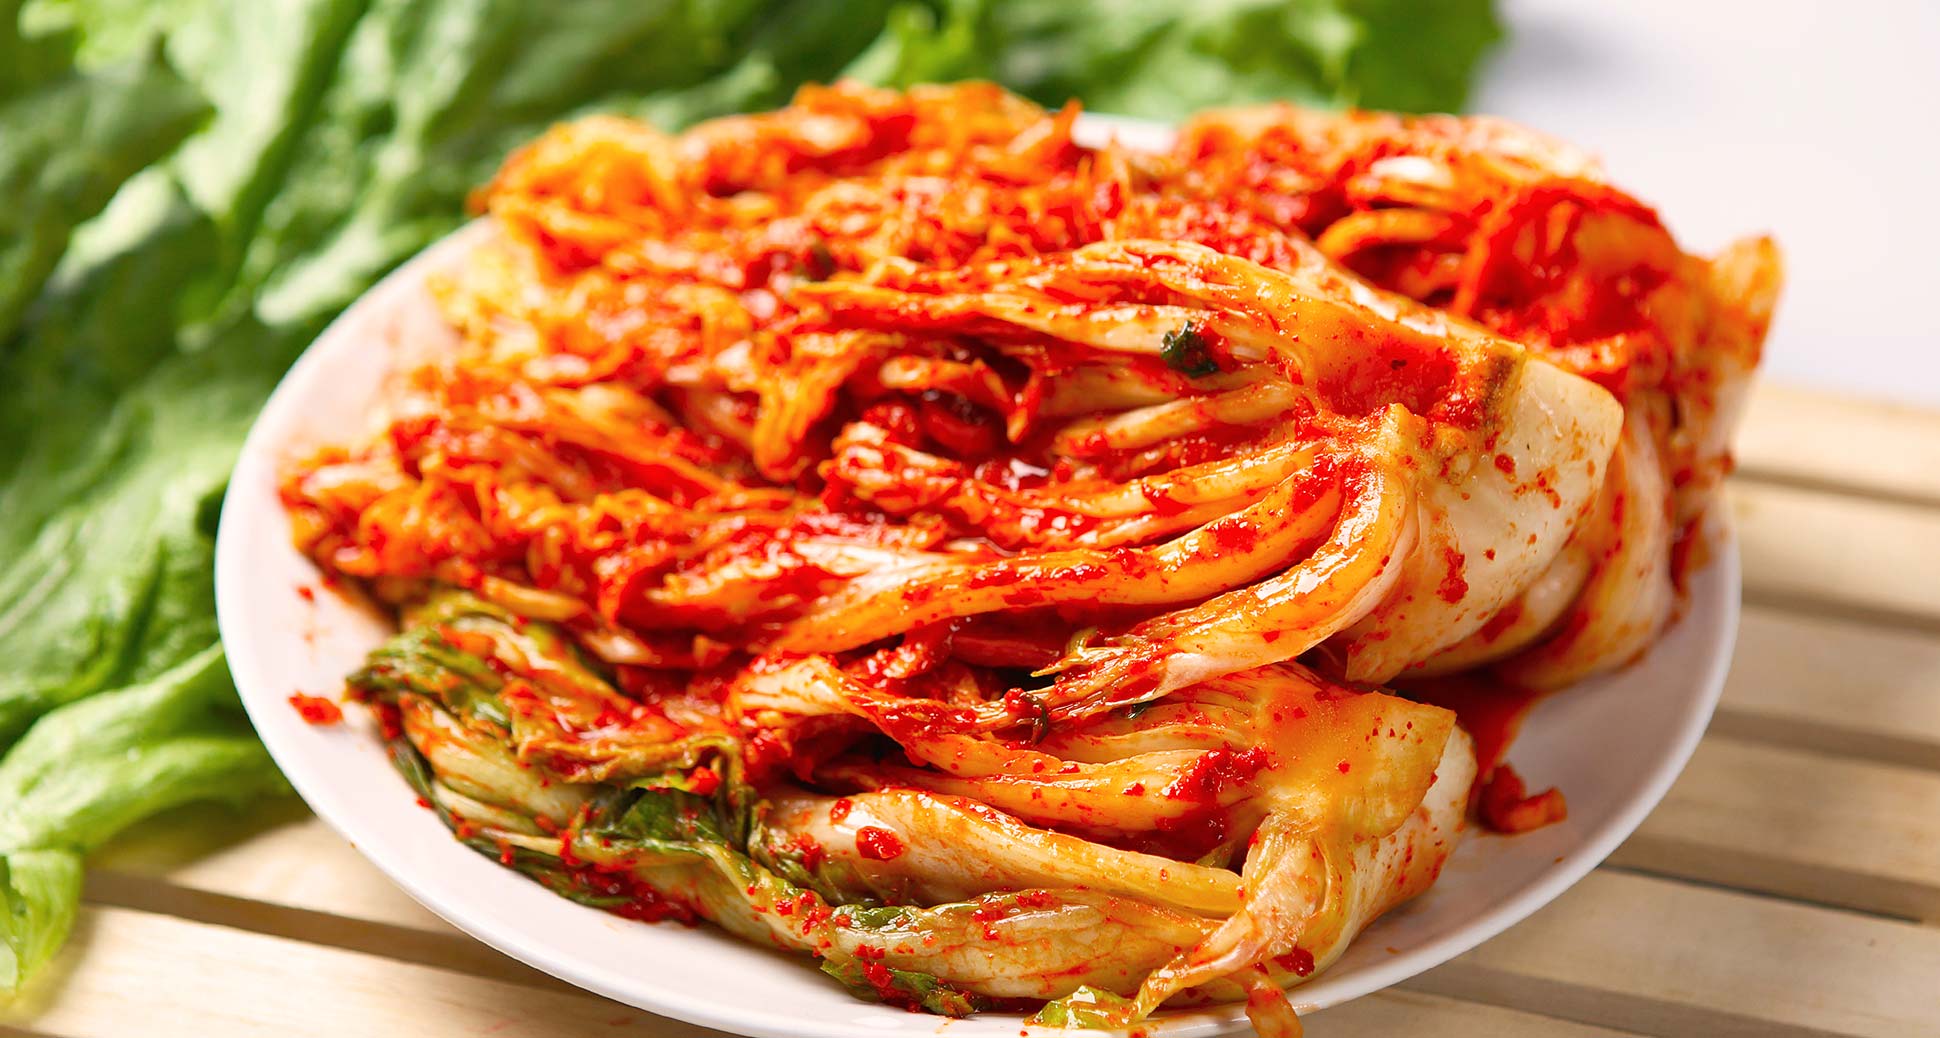      http://d3pah2c10lnl36.cloudfront.net/sura_wp/wp-content/uploads/2015/10/SUra-Korean-Cuisine-Koreas-Greatest-Food-Kimchi-Blog.jpg 